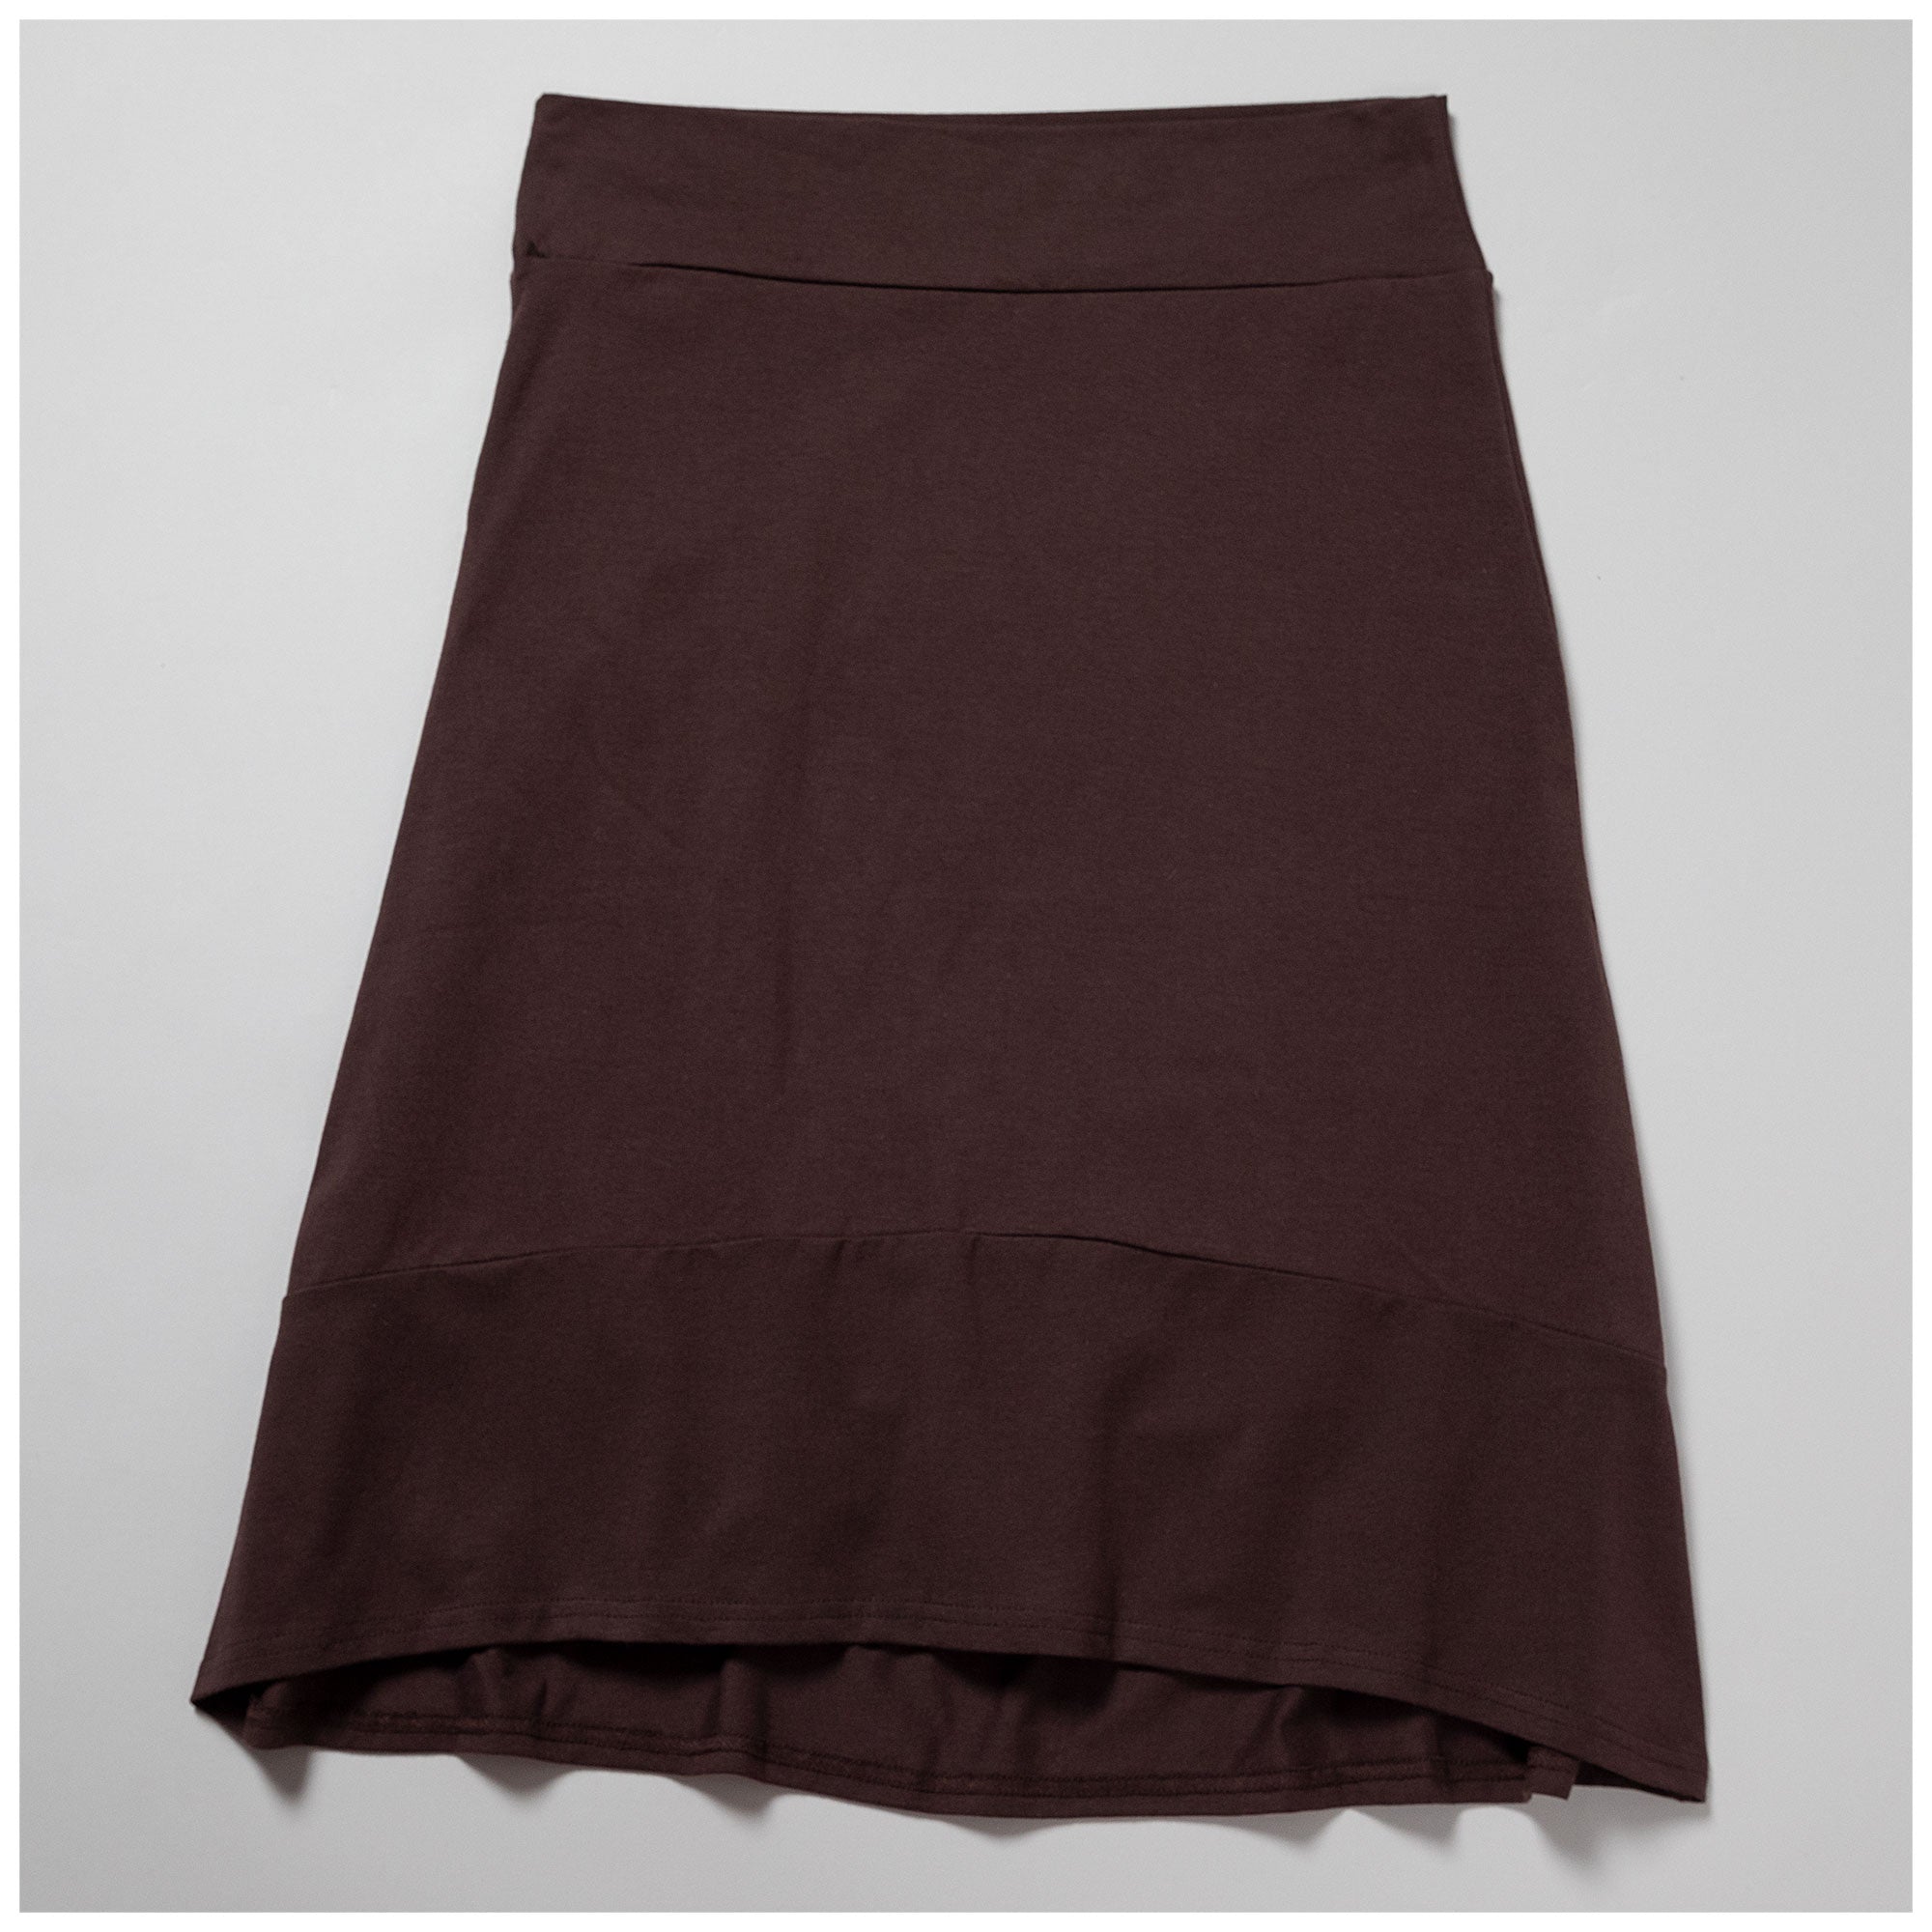 Organic High Low Skirt - Brown - S